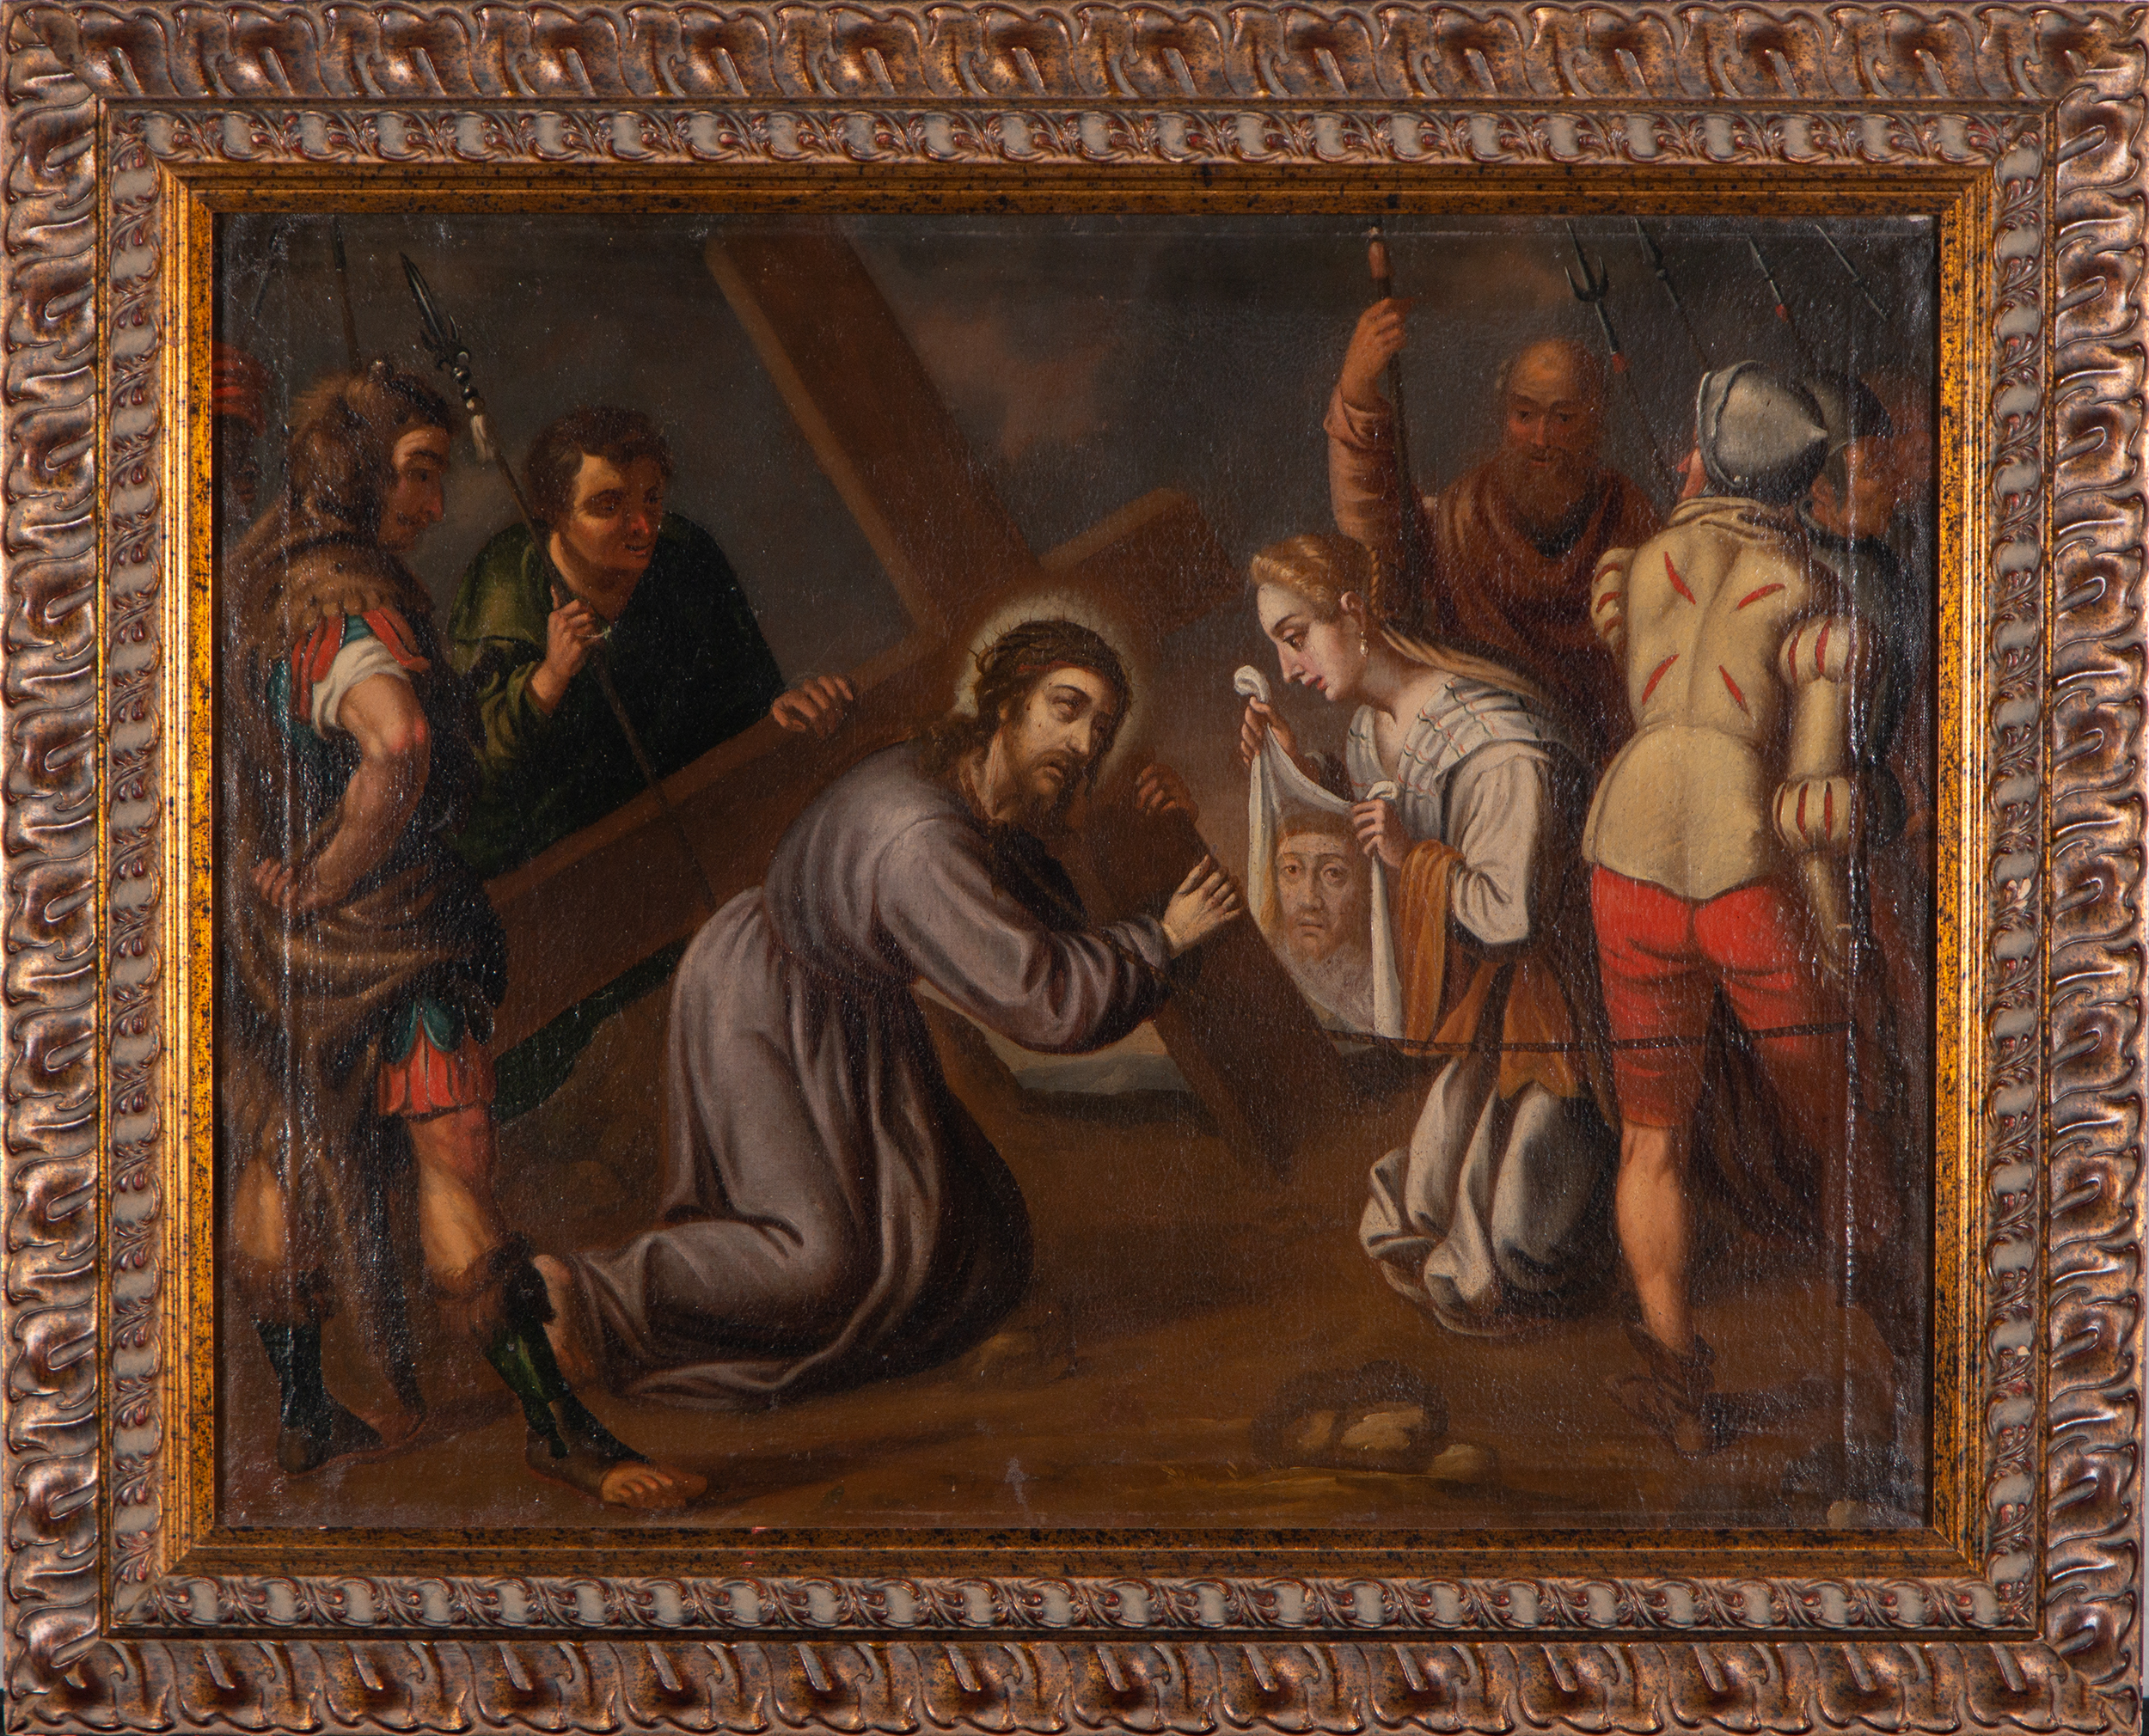 Christ Carrying the Cross, Italian school of the 17th century